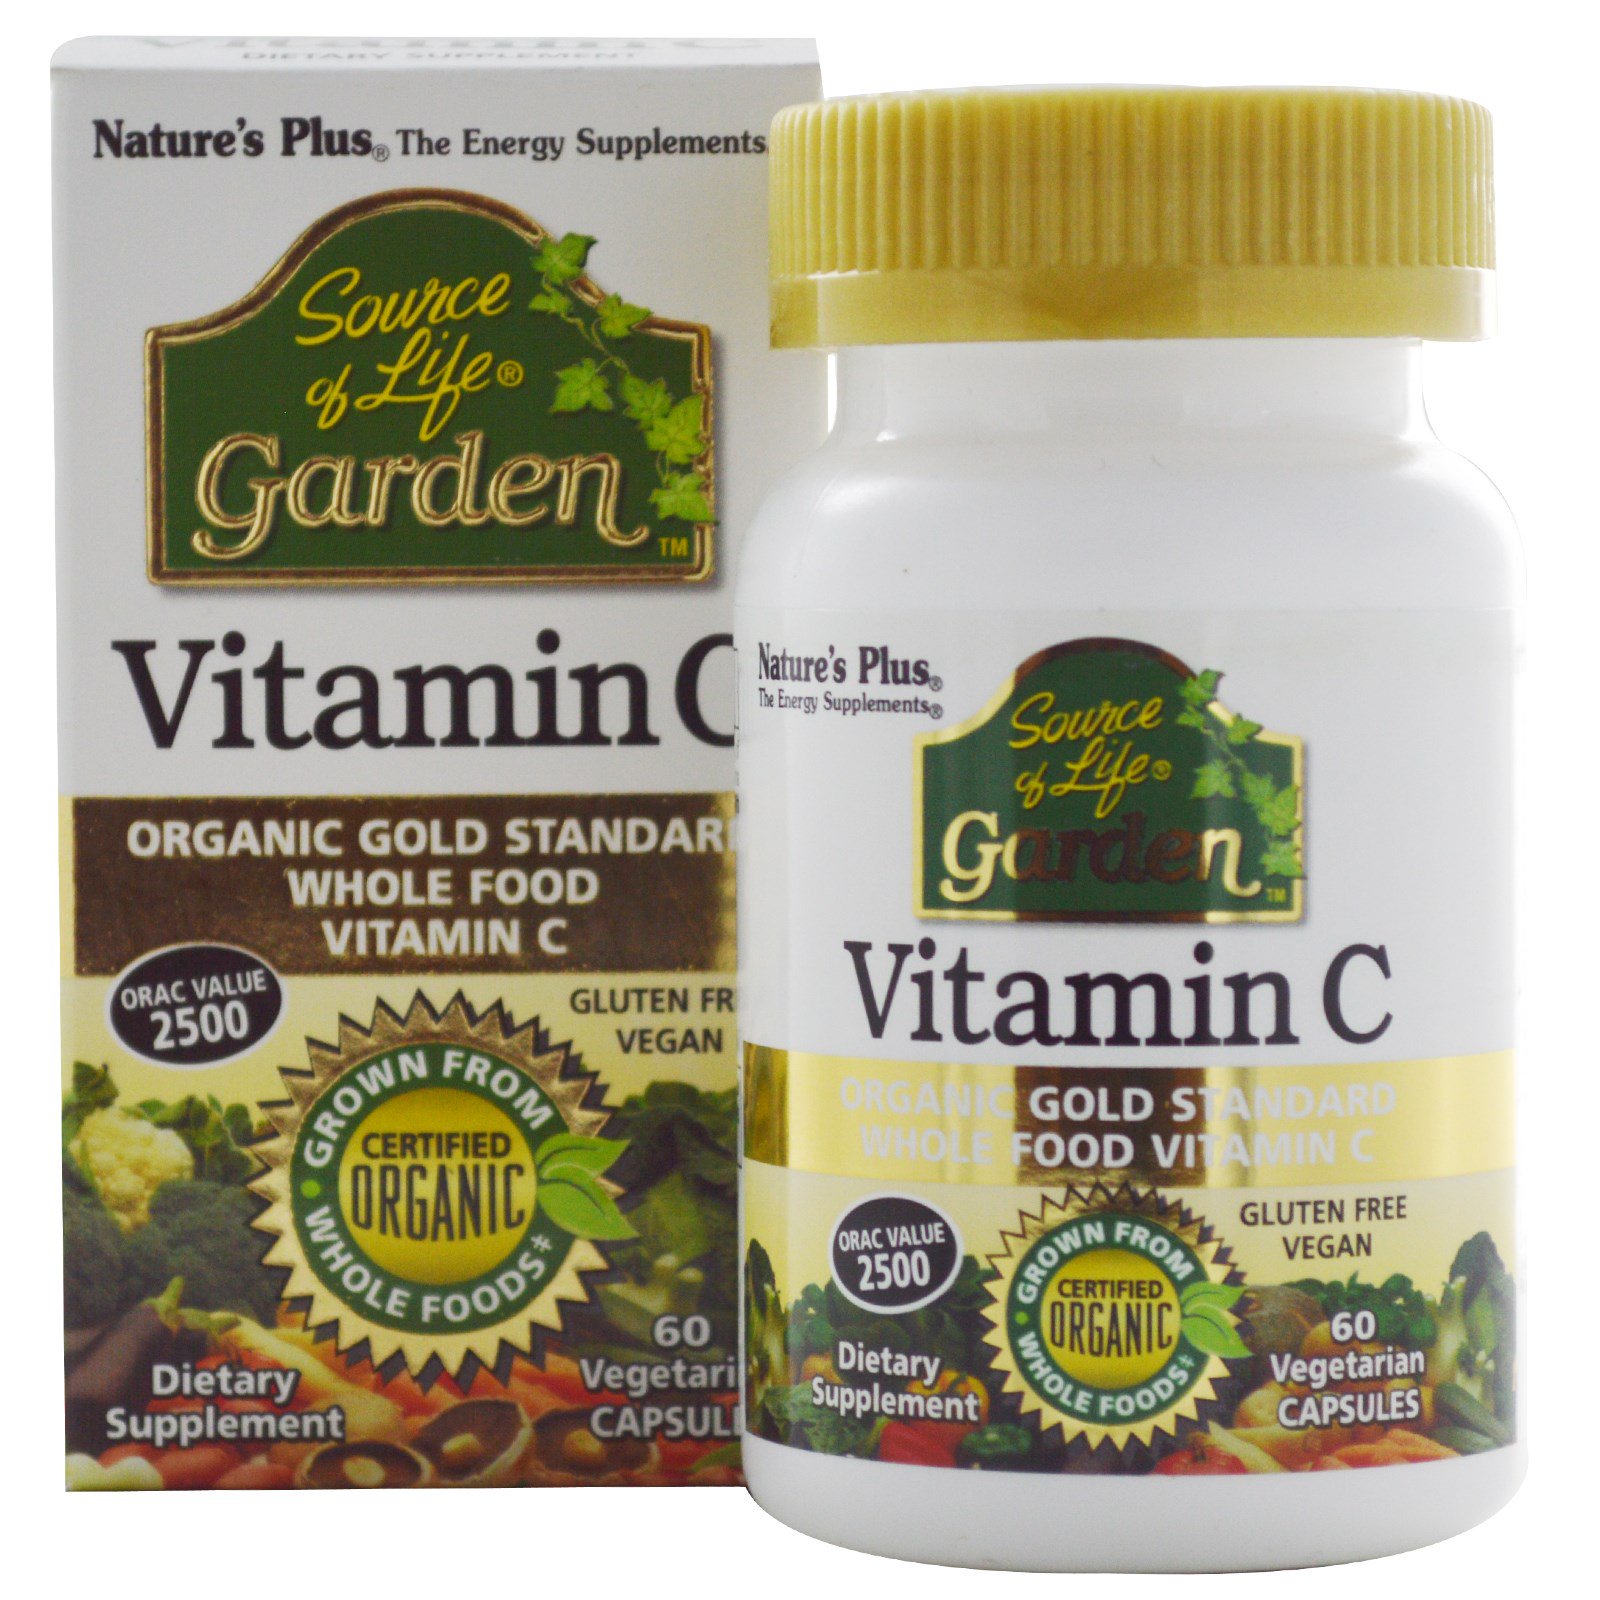 Natures plus витамины. Nature's Plus vitamina c. Natures Plus Vitamin c. Витамины Garden. Гарден лайф витамины.